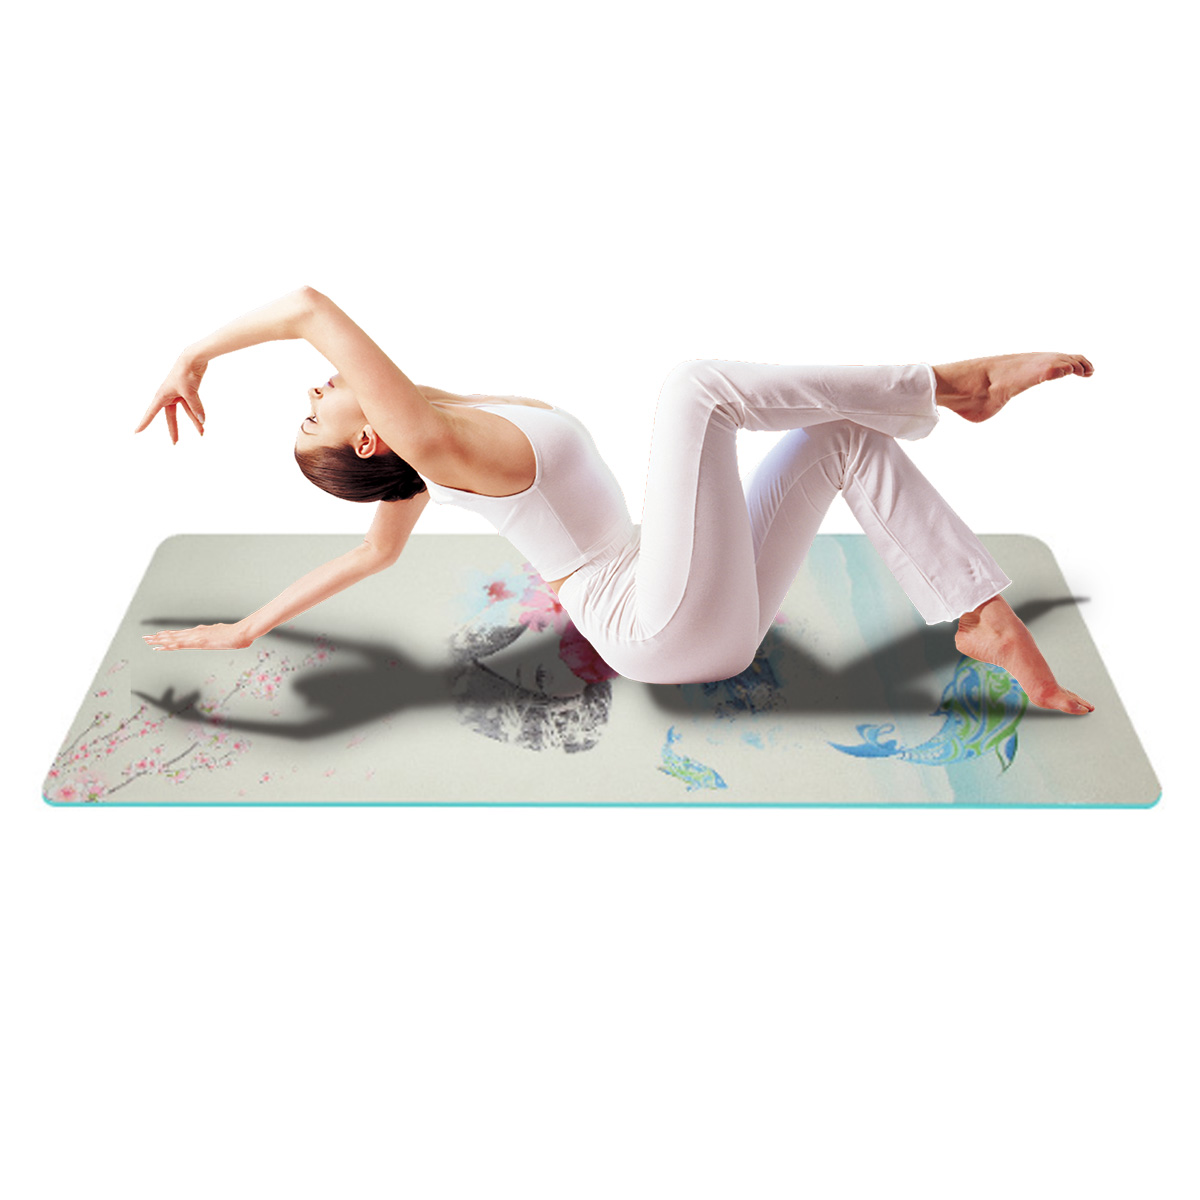 5mm-Yoga-Mats-Extra-Thick-Non-Slip-Design-Exercise-Fitness-Pilates-Print-61183cm-1478598